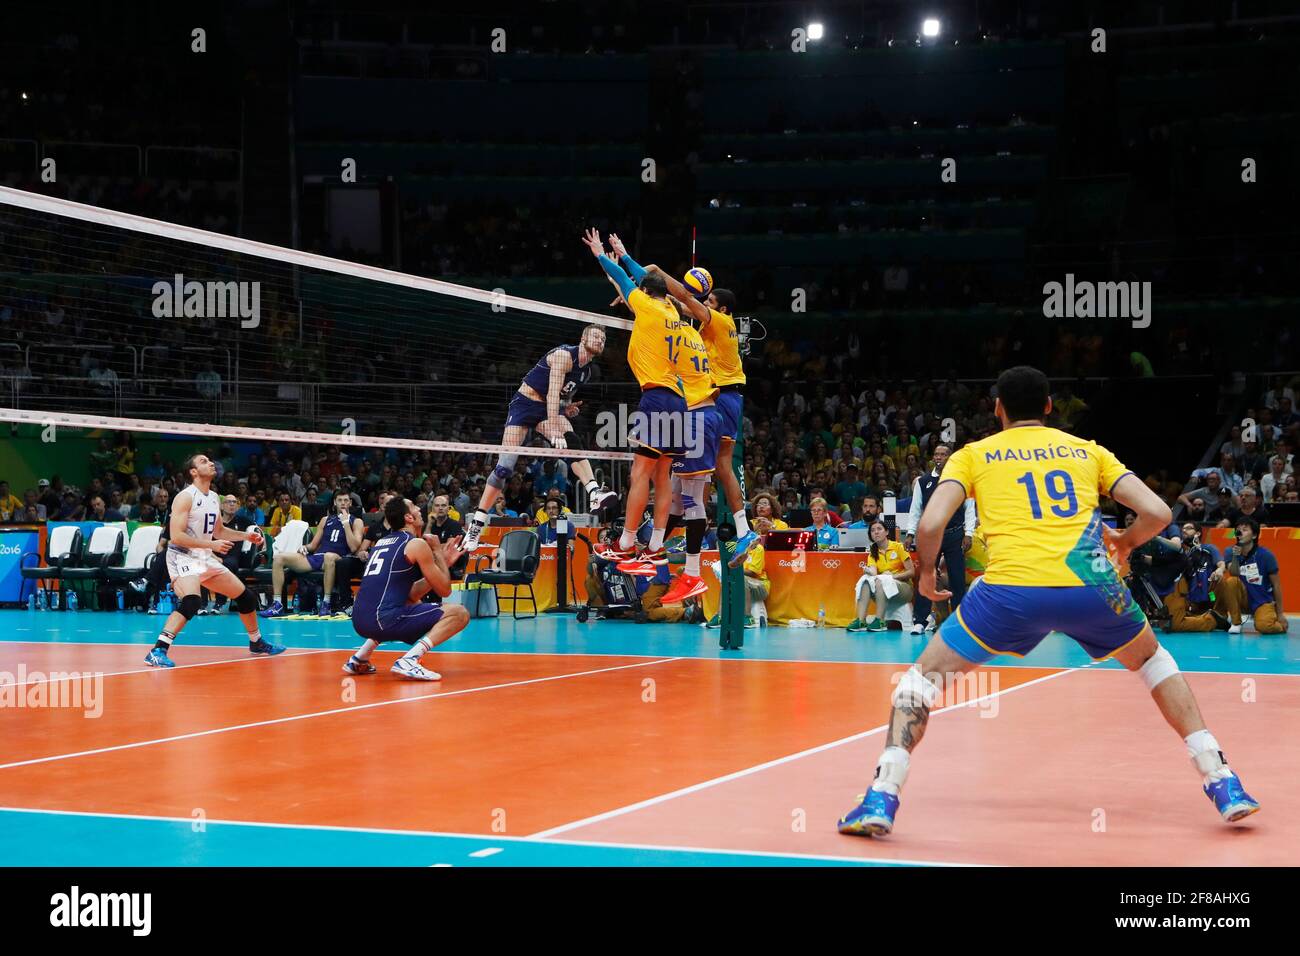 Brazilian mens national volleyball team wins gold medal final match vs Italy  at Rio 2016 Summer Olympic Games, Maracanazinho Stadium Stock Photo - Alamy